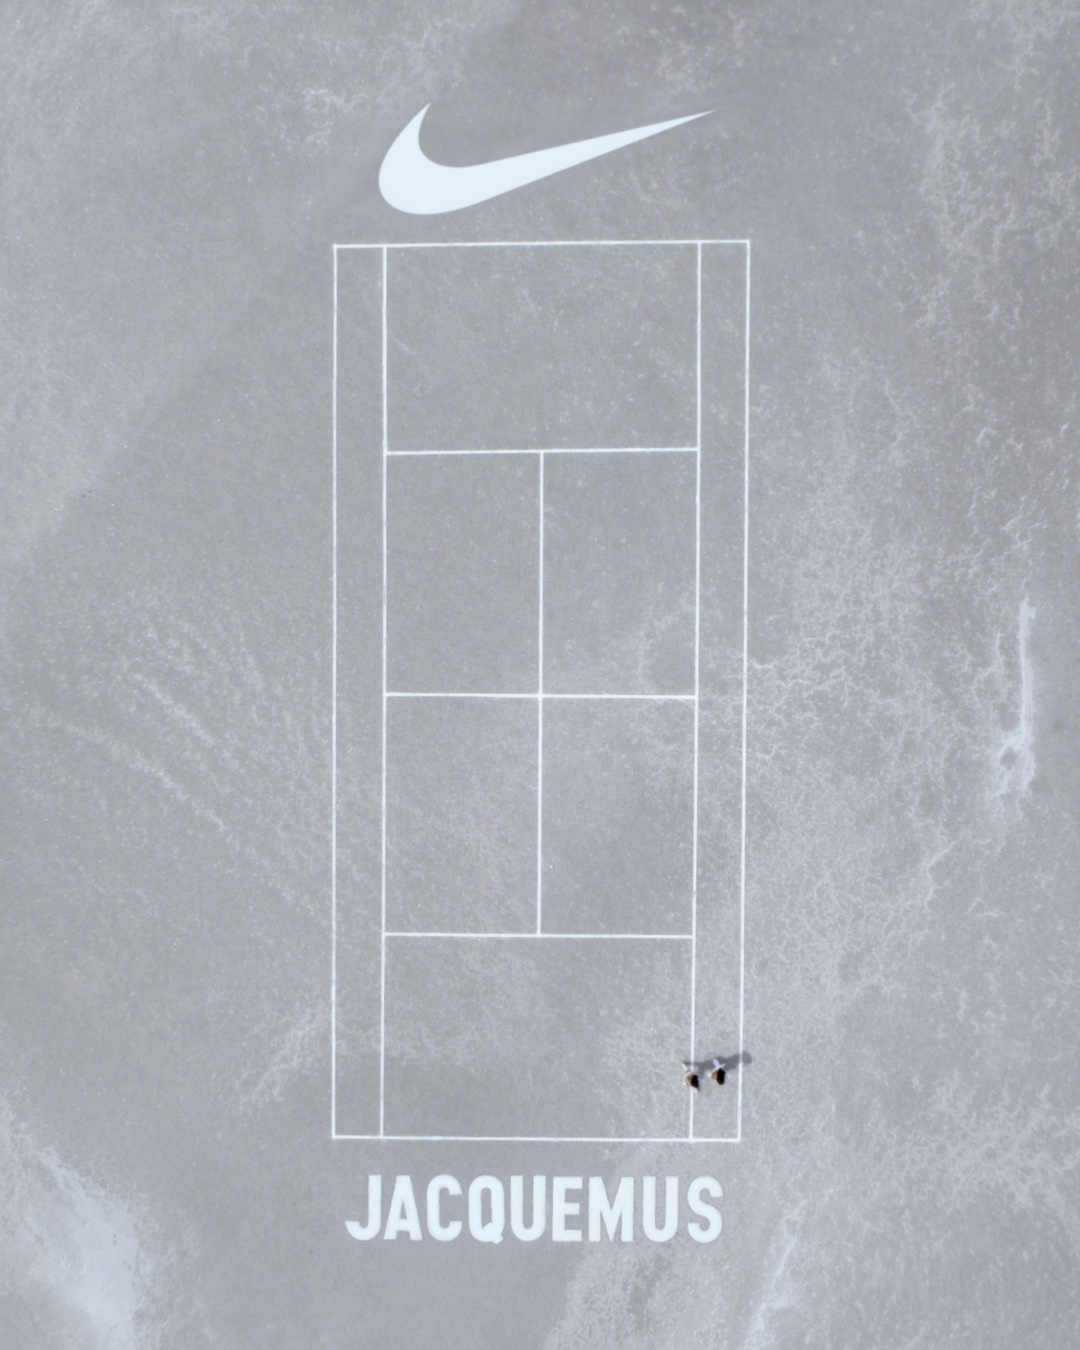 Nike_x_Jacquemus_Aerial_Logo_Still_108110